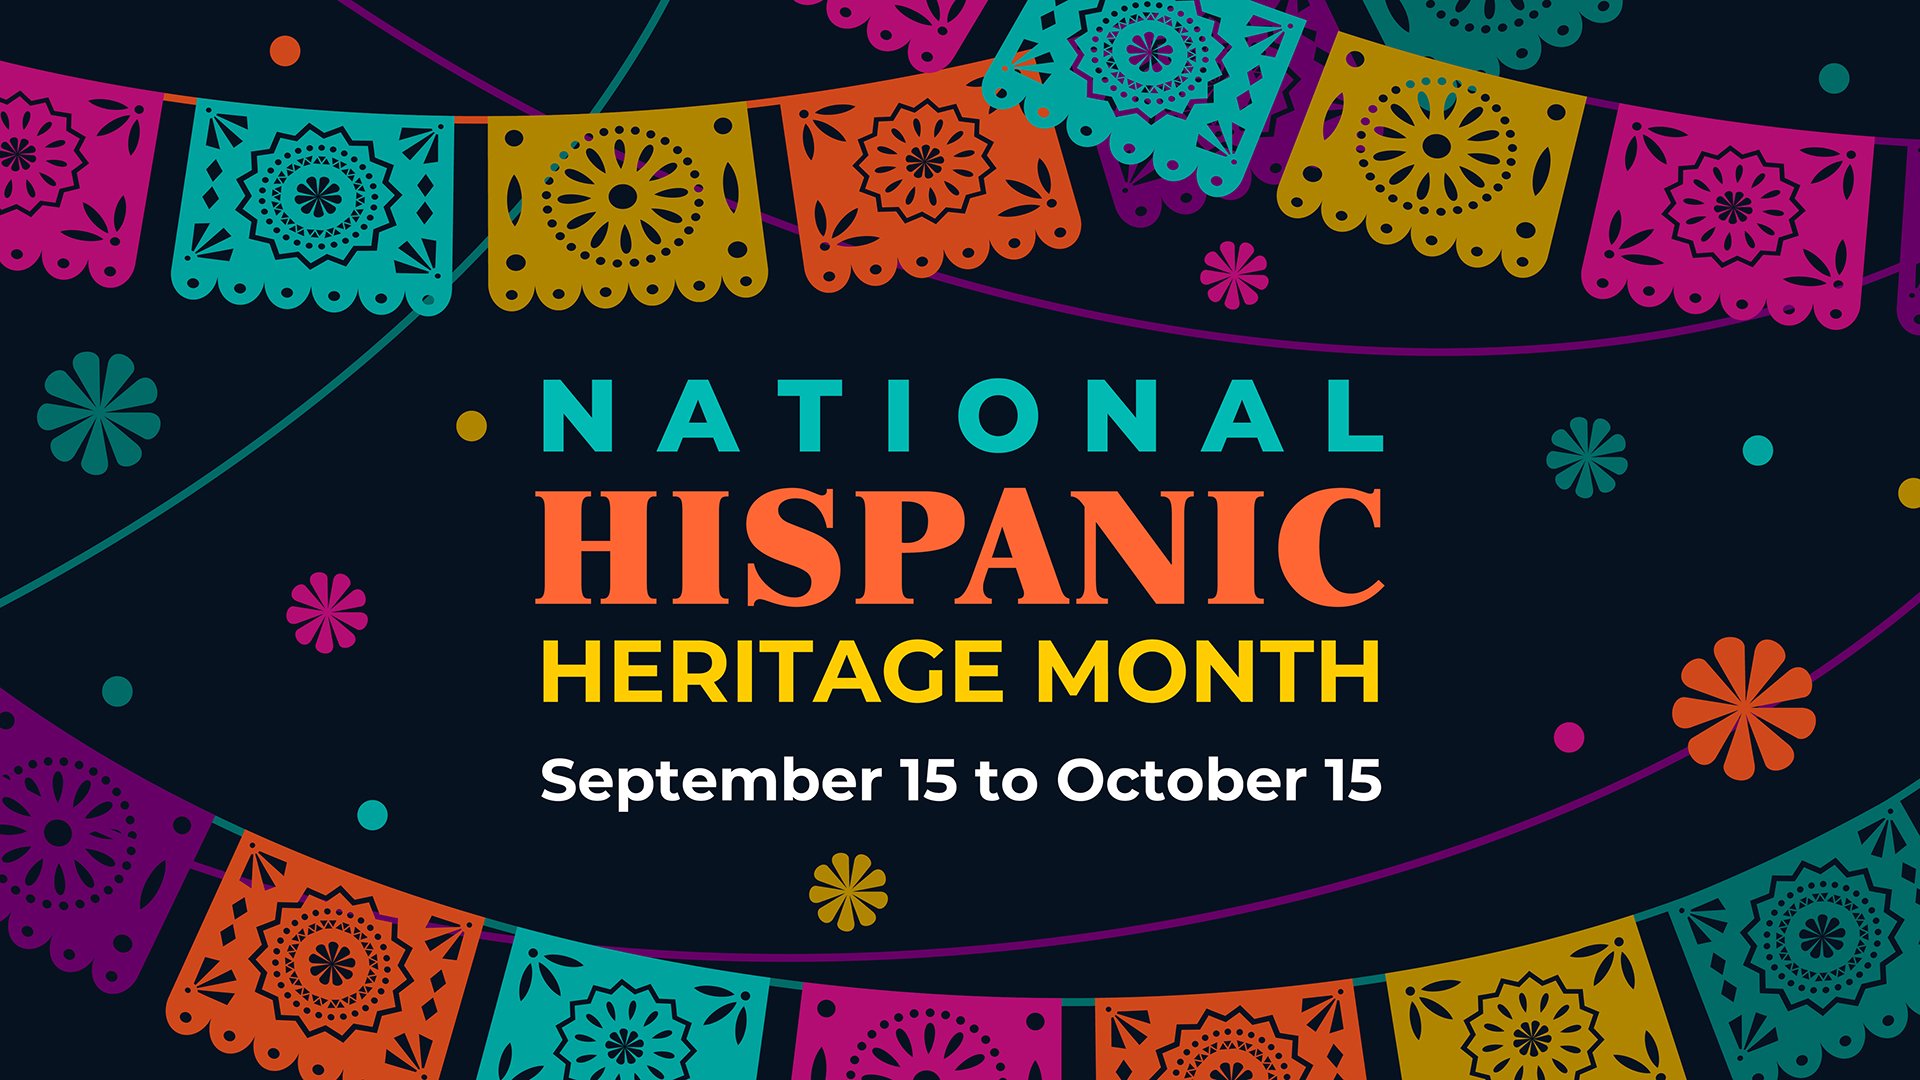 Hispanic Heritage Month Banner